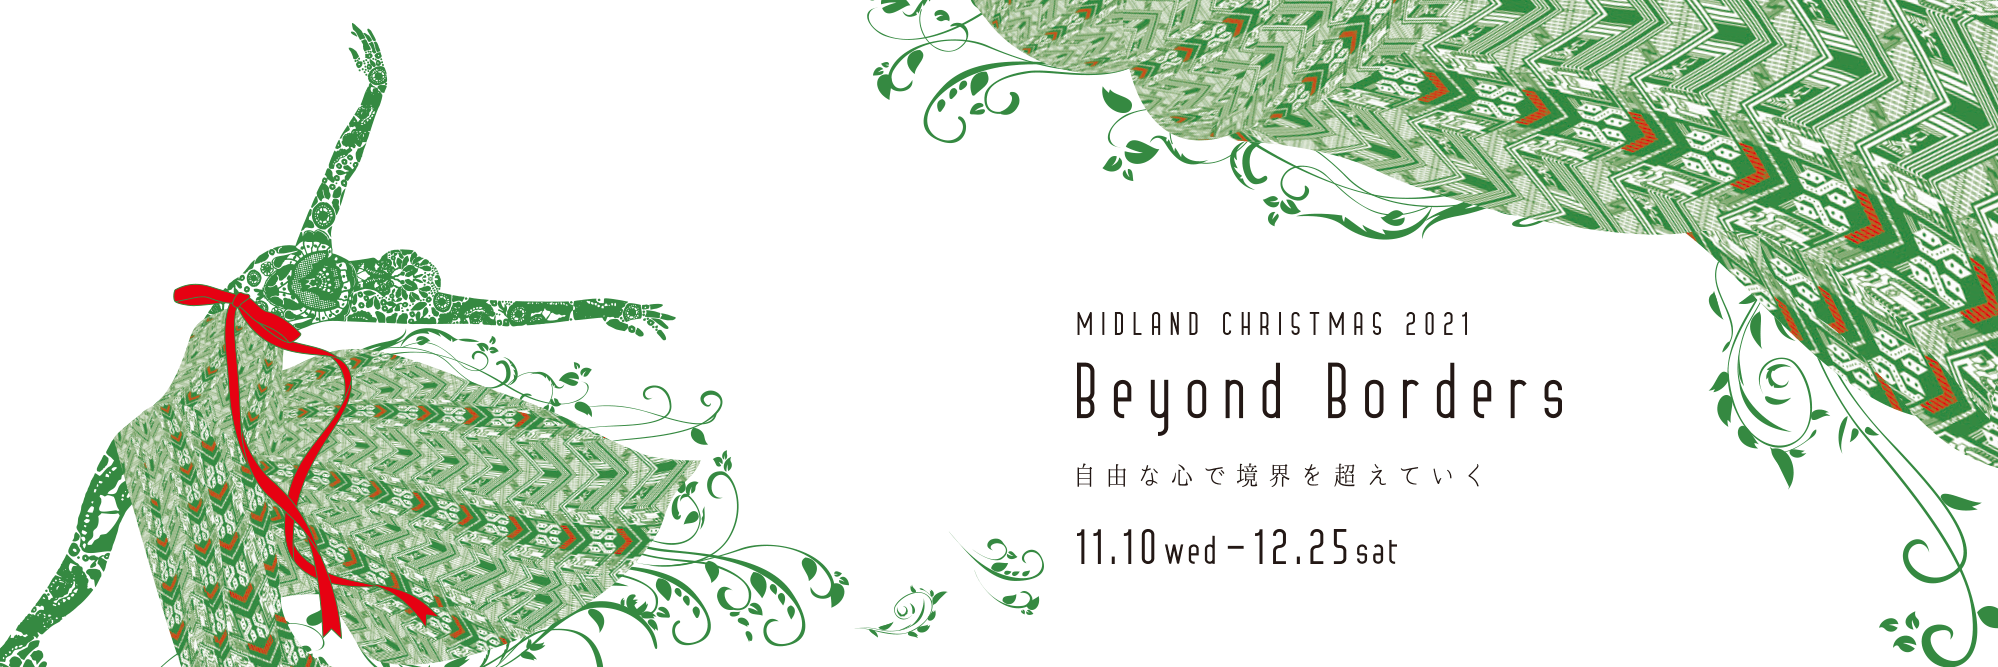 MIDLAND CHRISMAS 2021 Byond Borders 11.10wed-12.25sat 自由な心で境界を越えていく